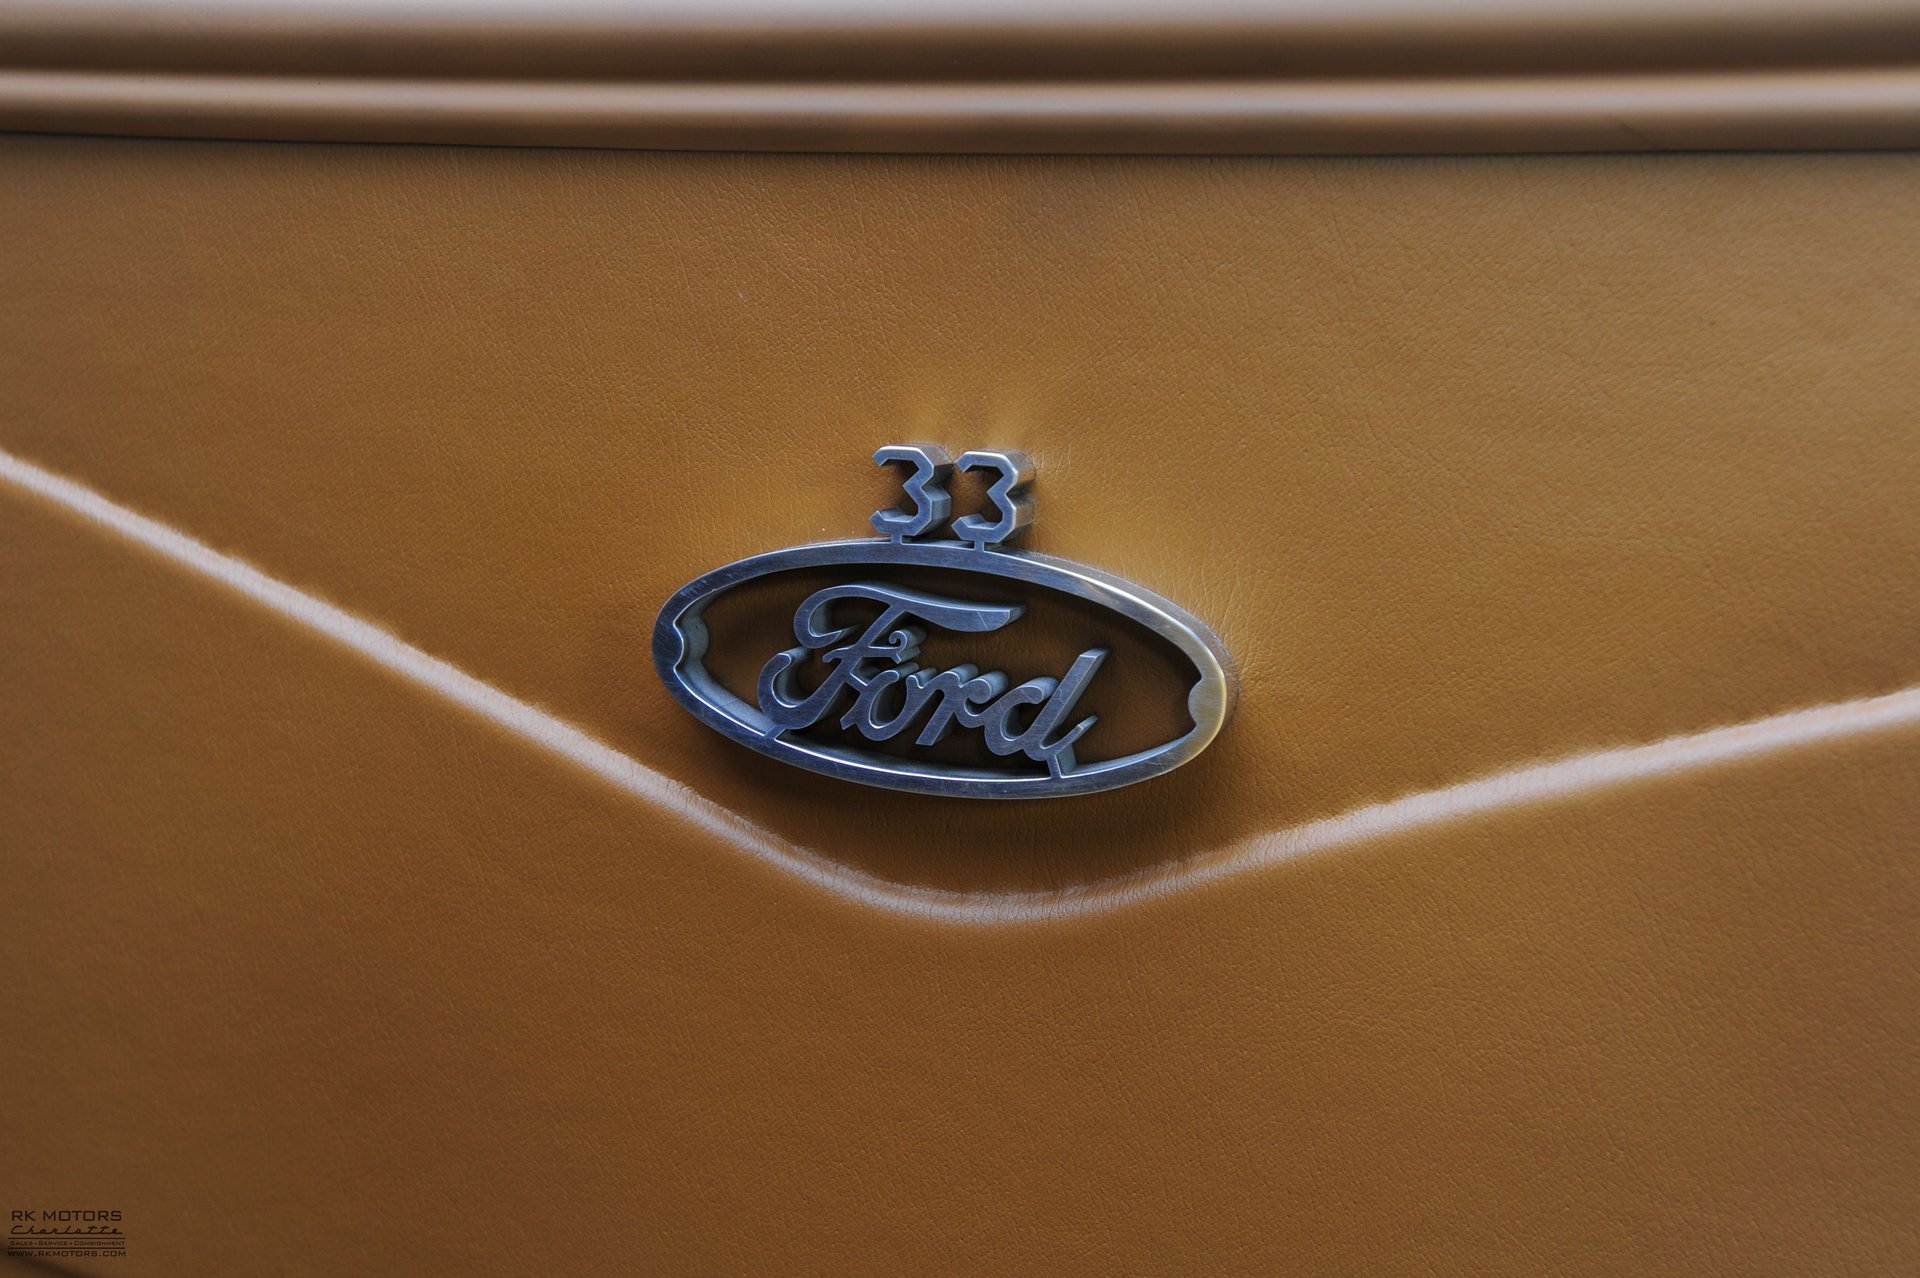 For Sale 1934 Ford Sedan